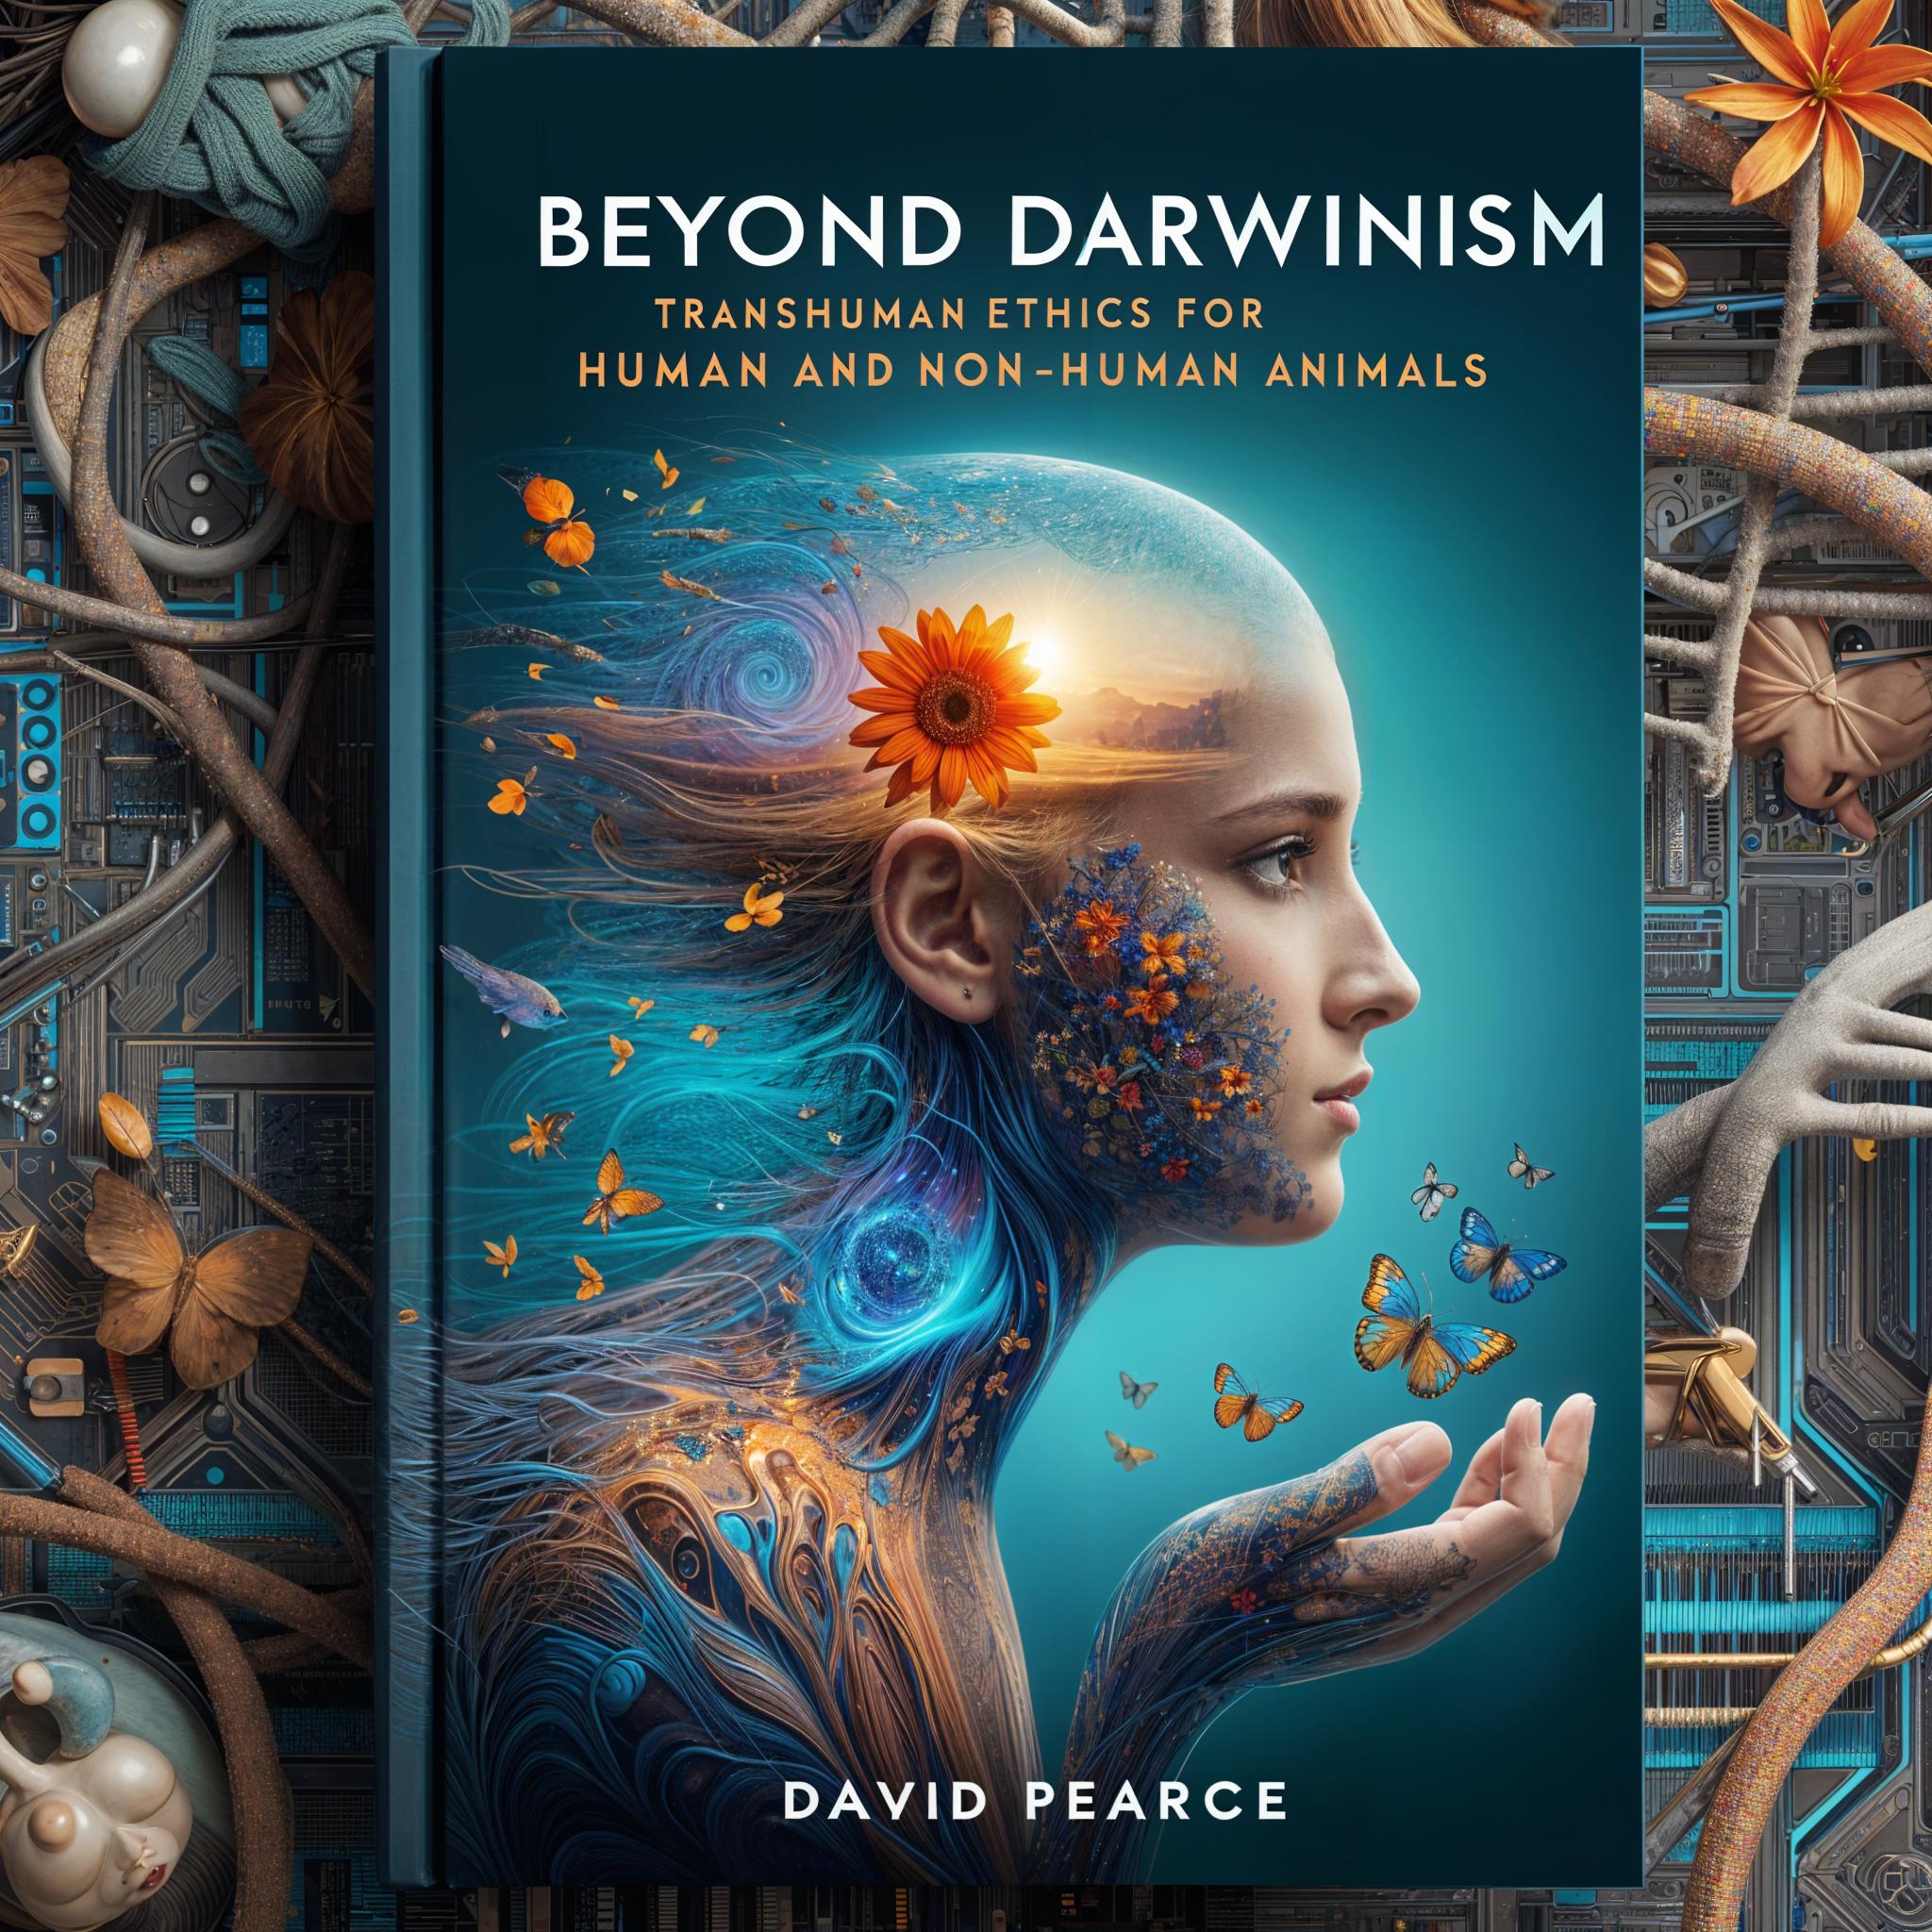 Beyond Darwinism: Transhuman Ethics for Human and NonHuman Animals by David Pearce